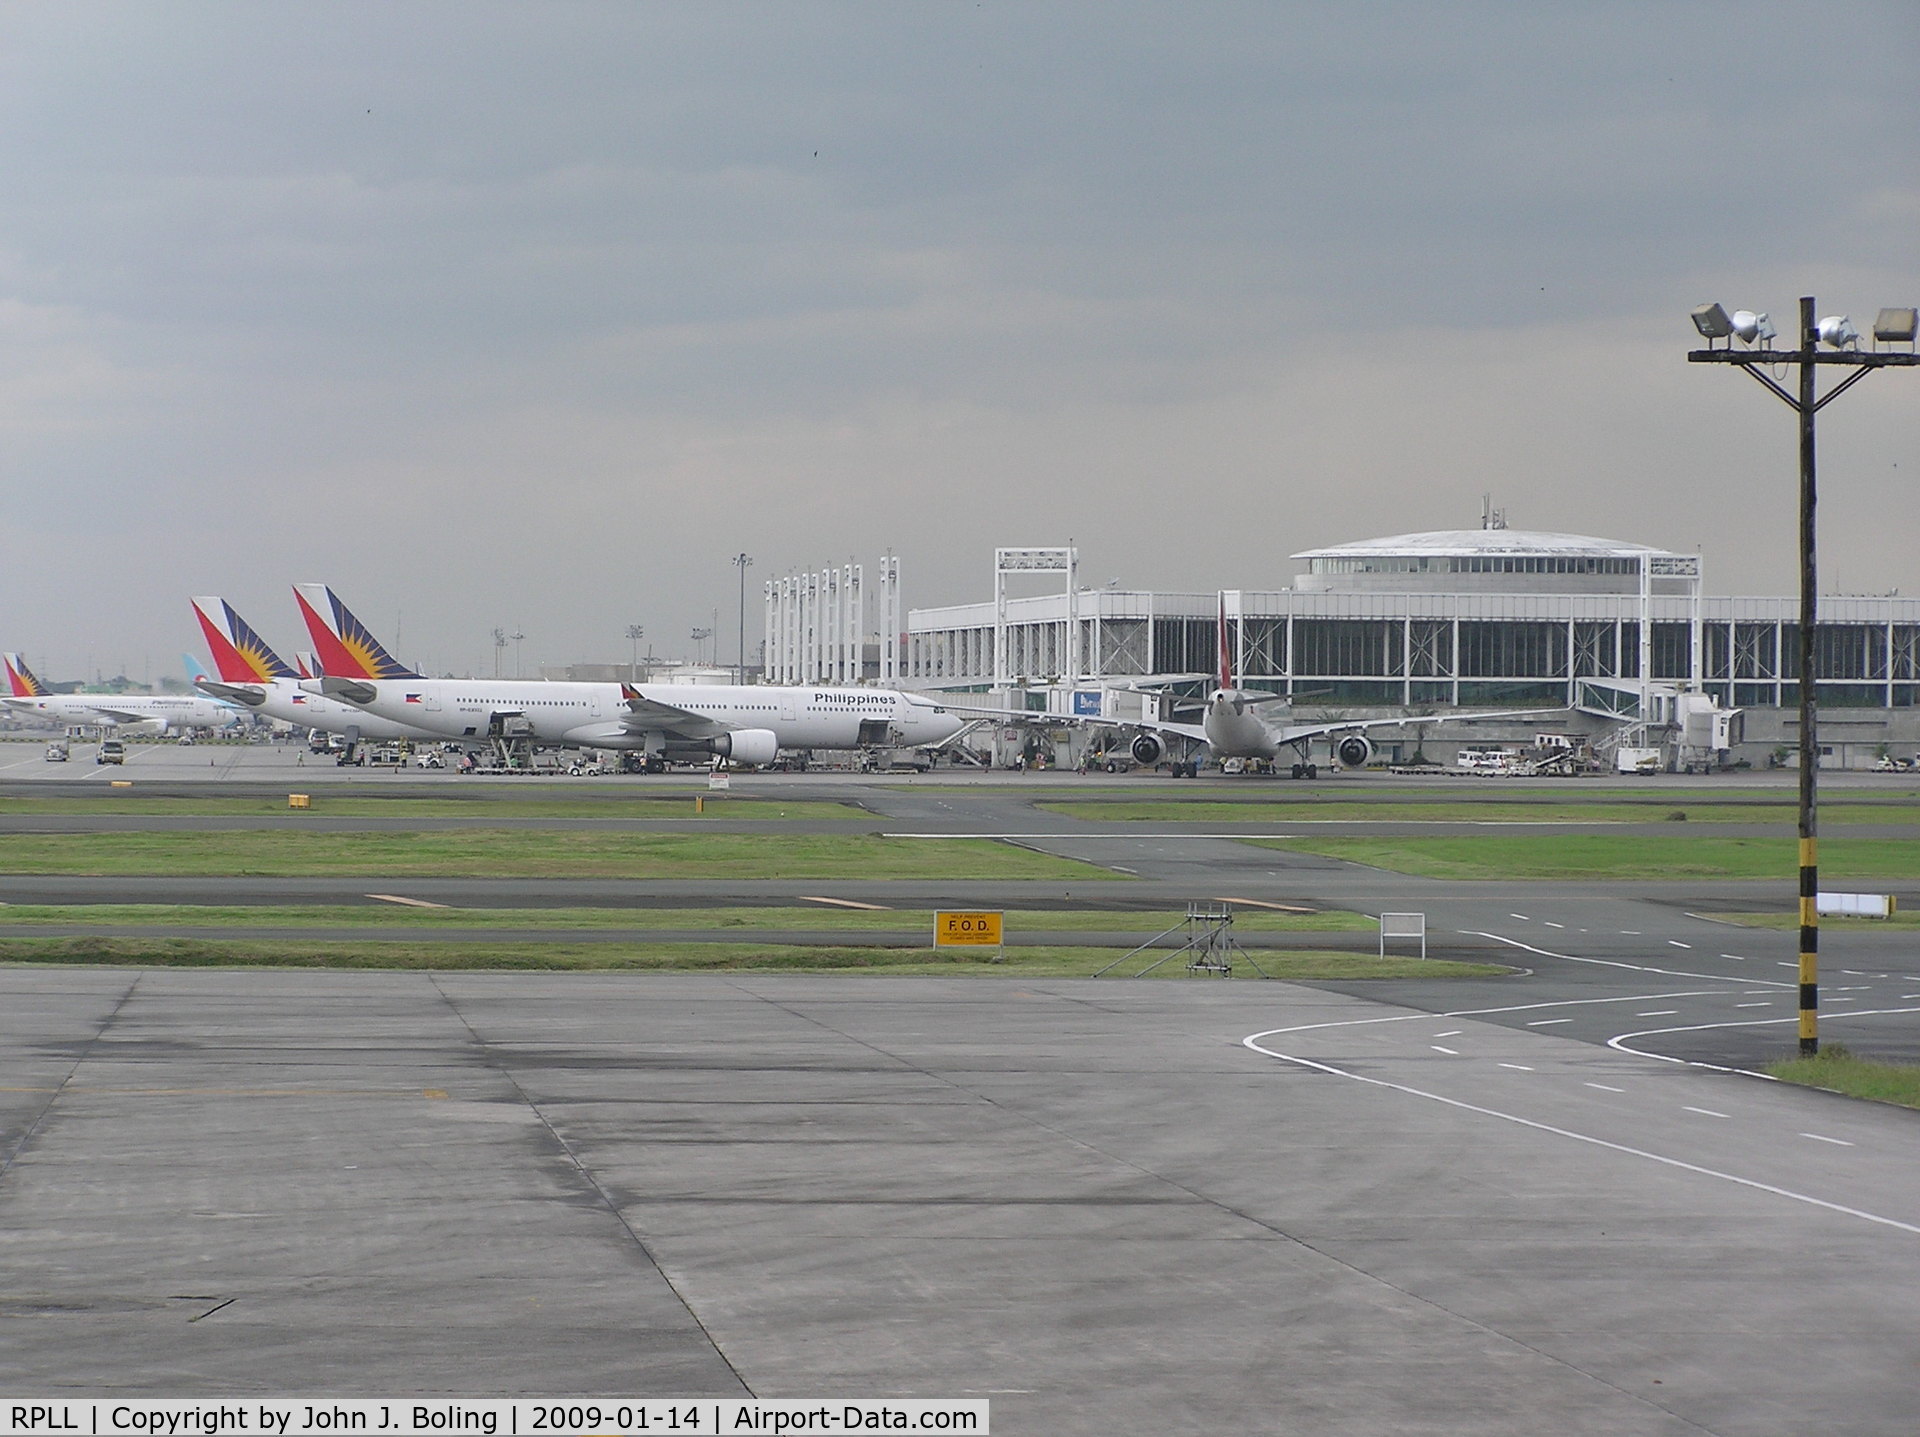 Ninoy Aquino International Airport, Manila Philippines (RPLL) - Terminal 2 at Manila